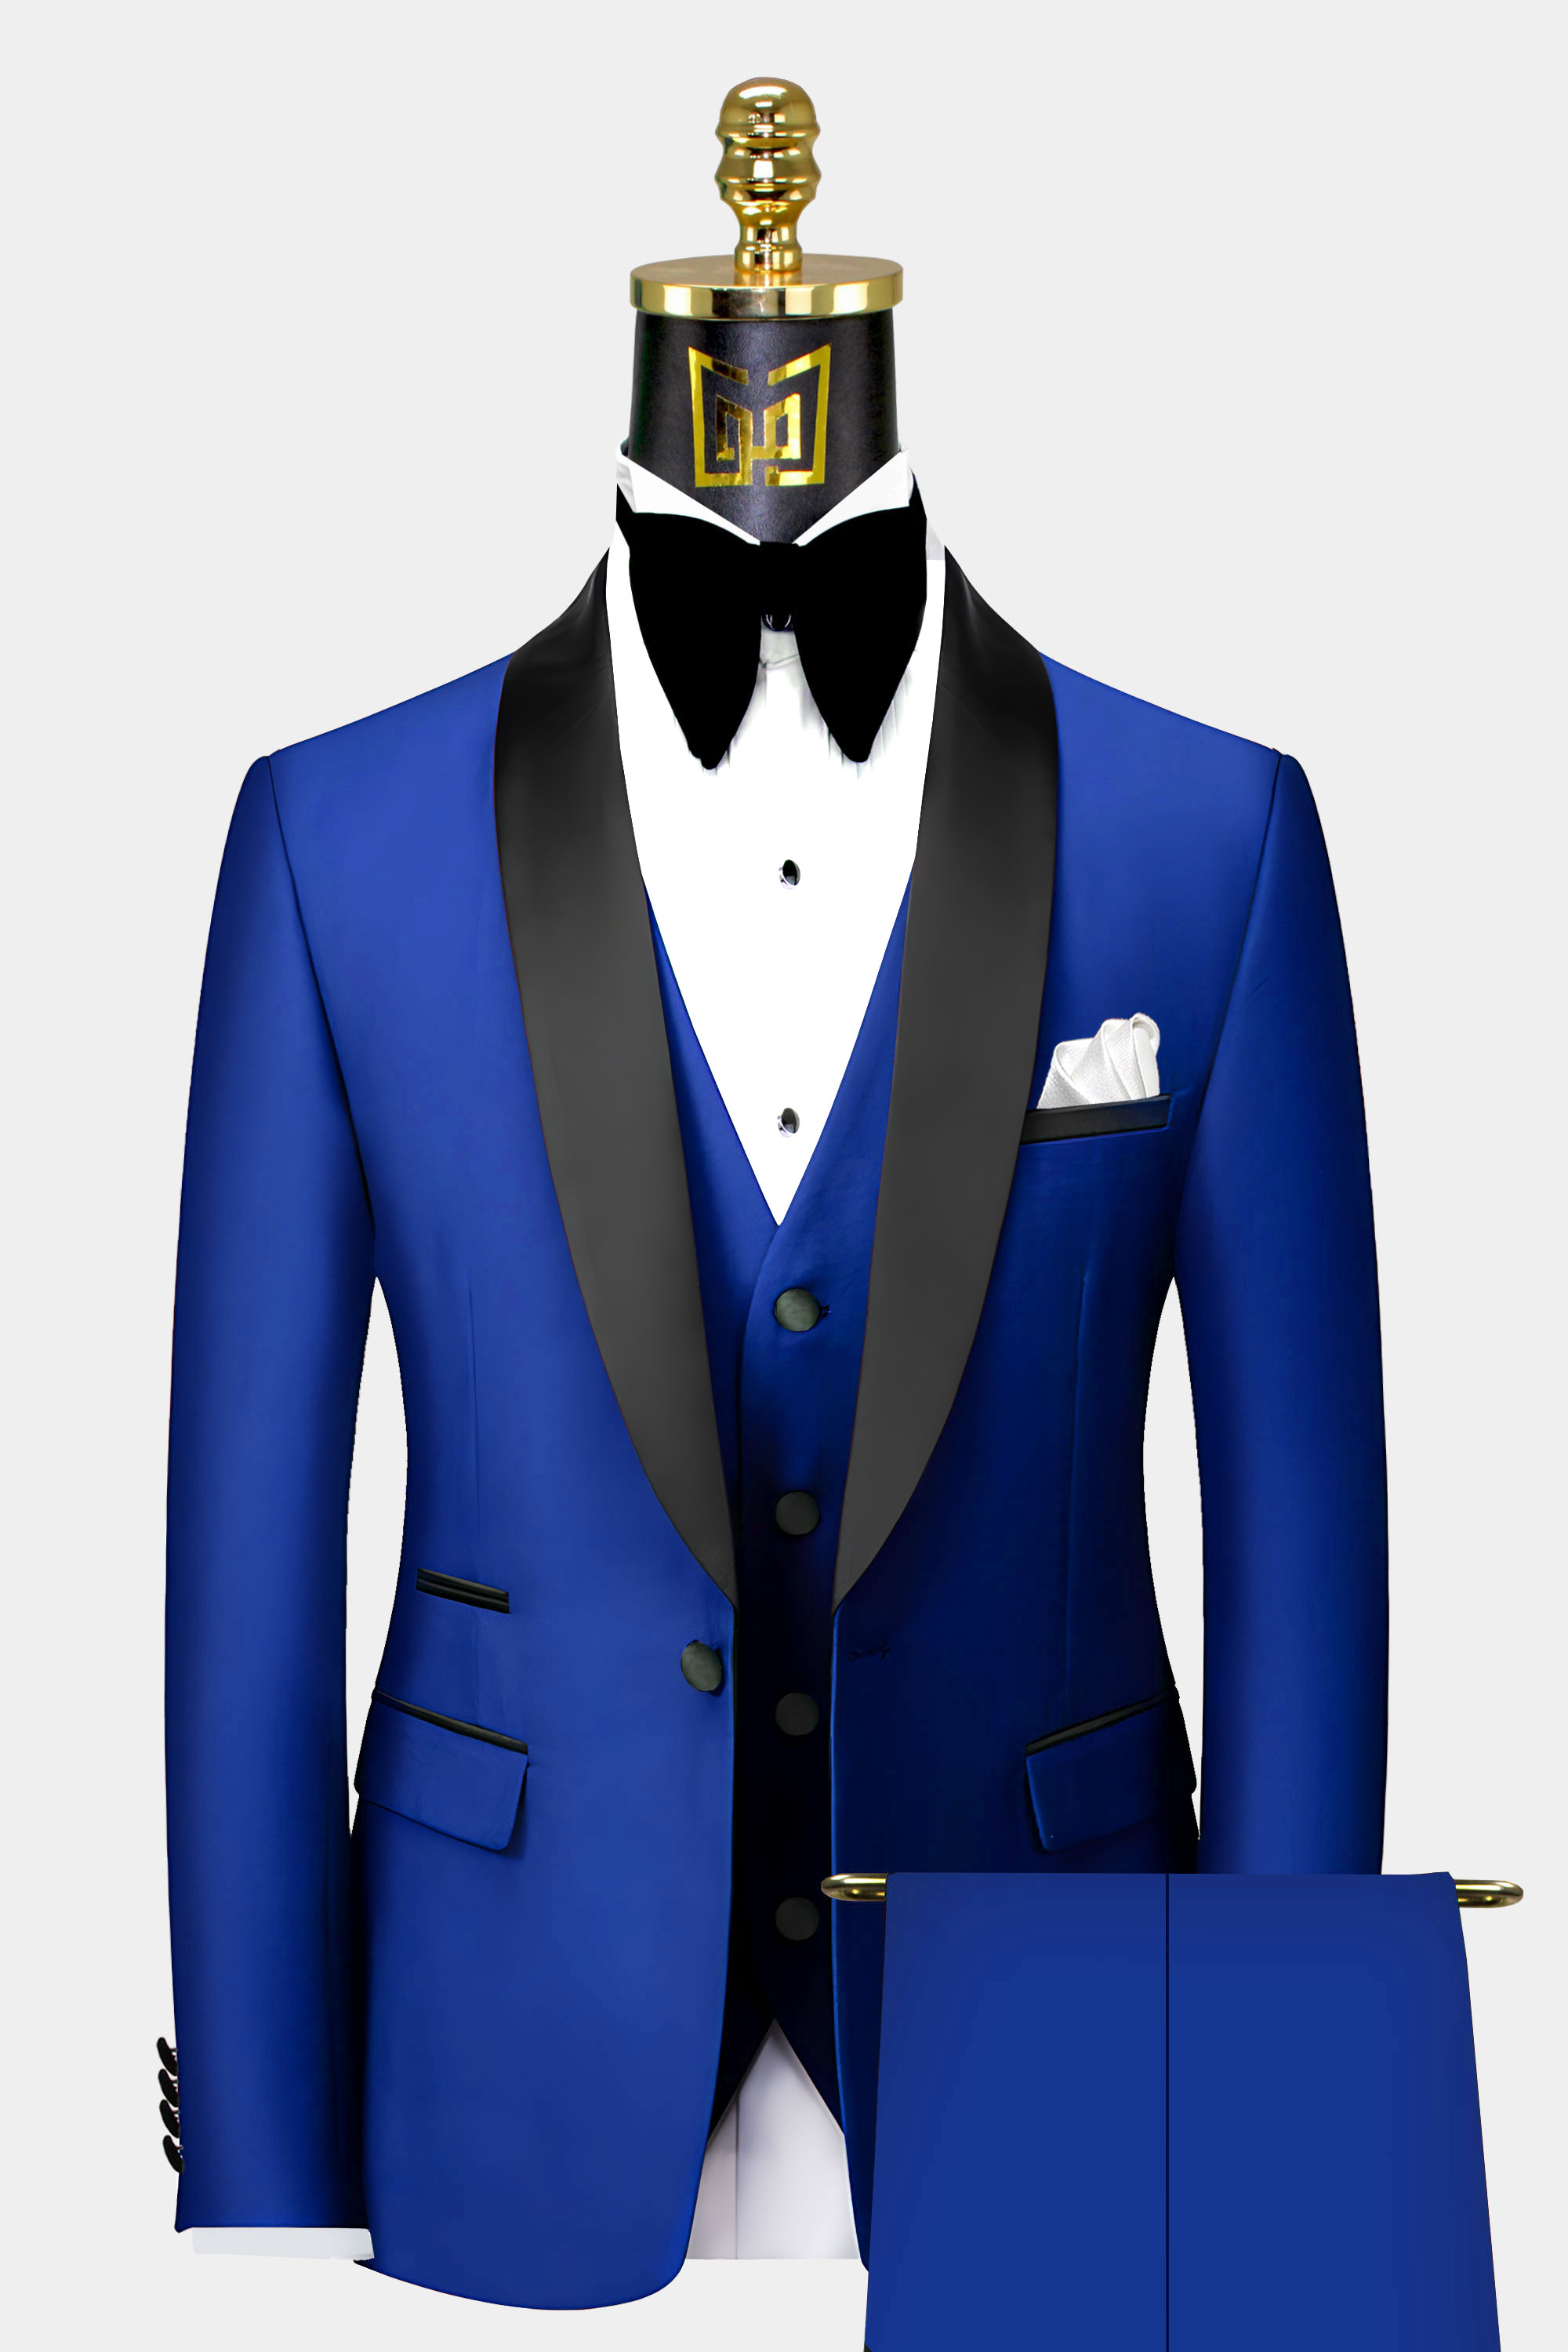 Mens-Royal-Blue-Tuxedo-with-Black-Lapel-Wedding-Groom-Prom-Suit-from-Gentlemansguru.com